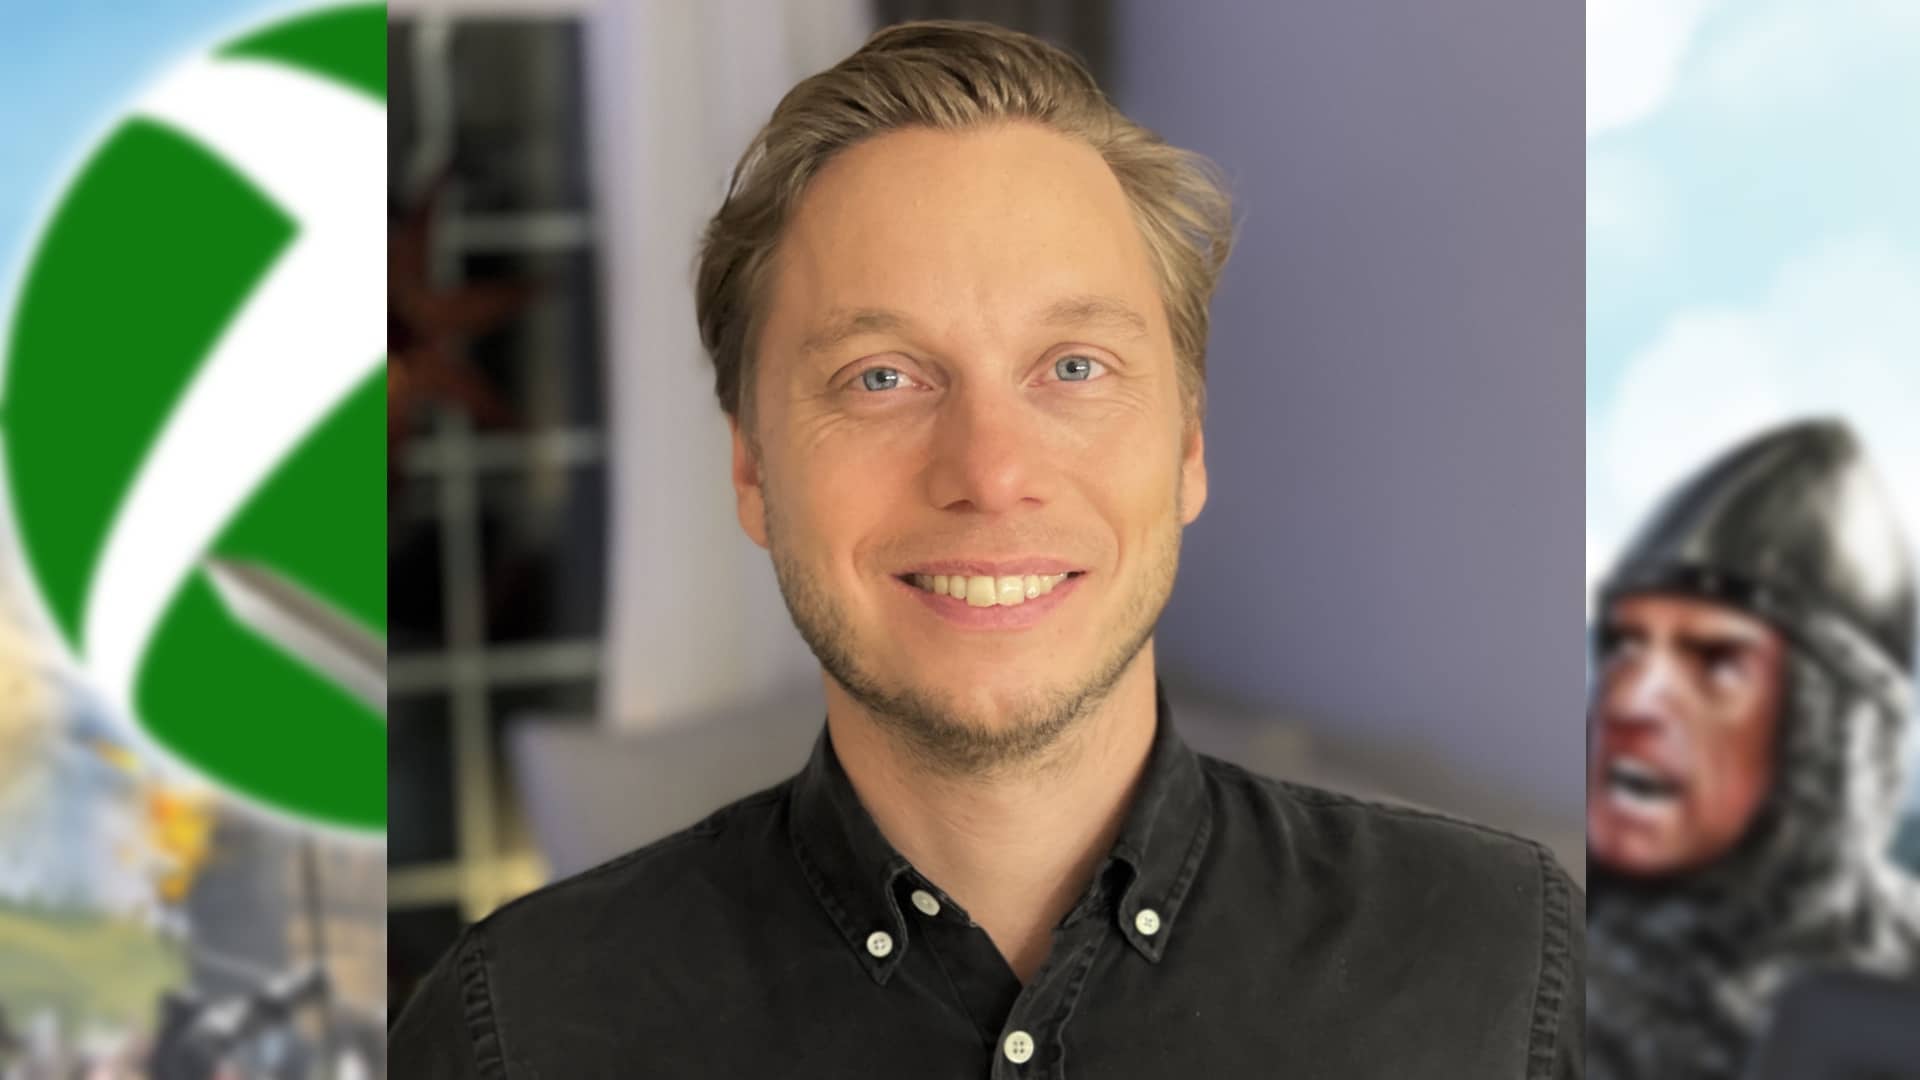 Johan Bolin est le directeur du marketing de Paradox Interactive.